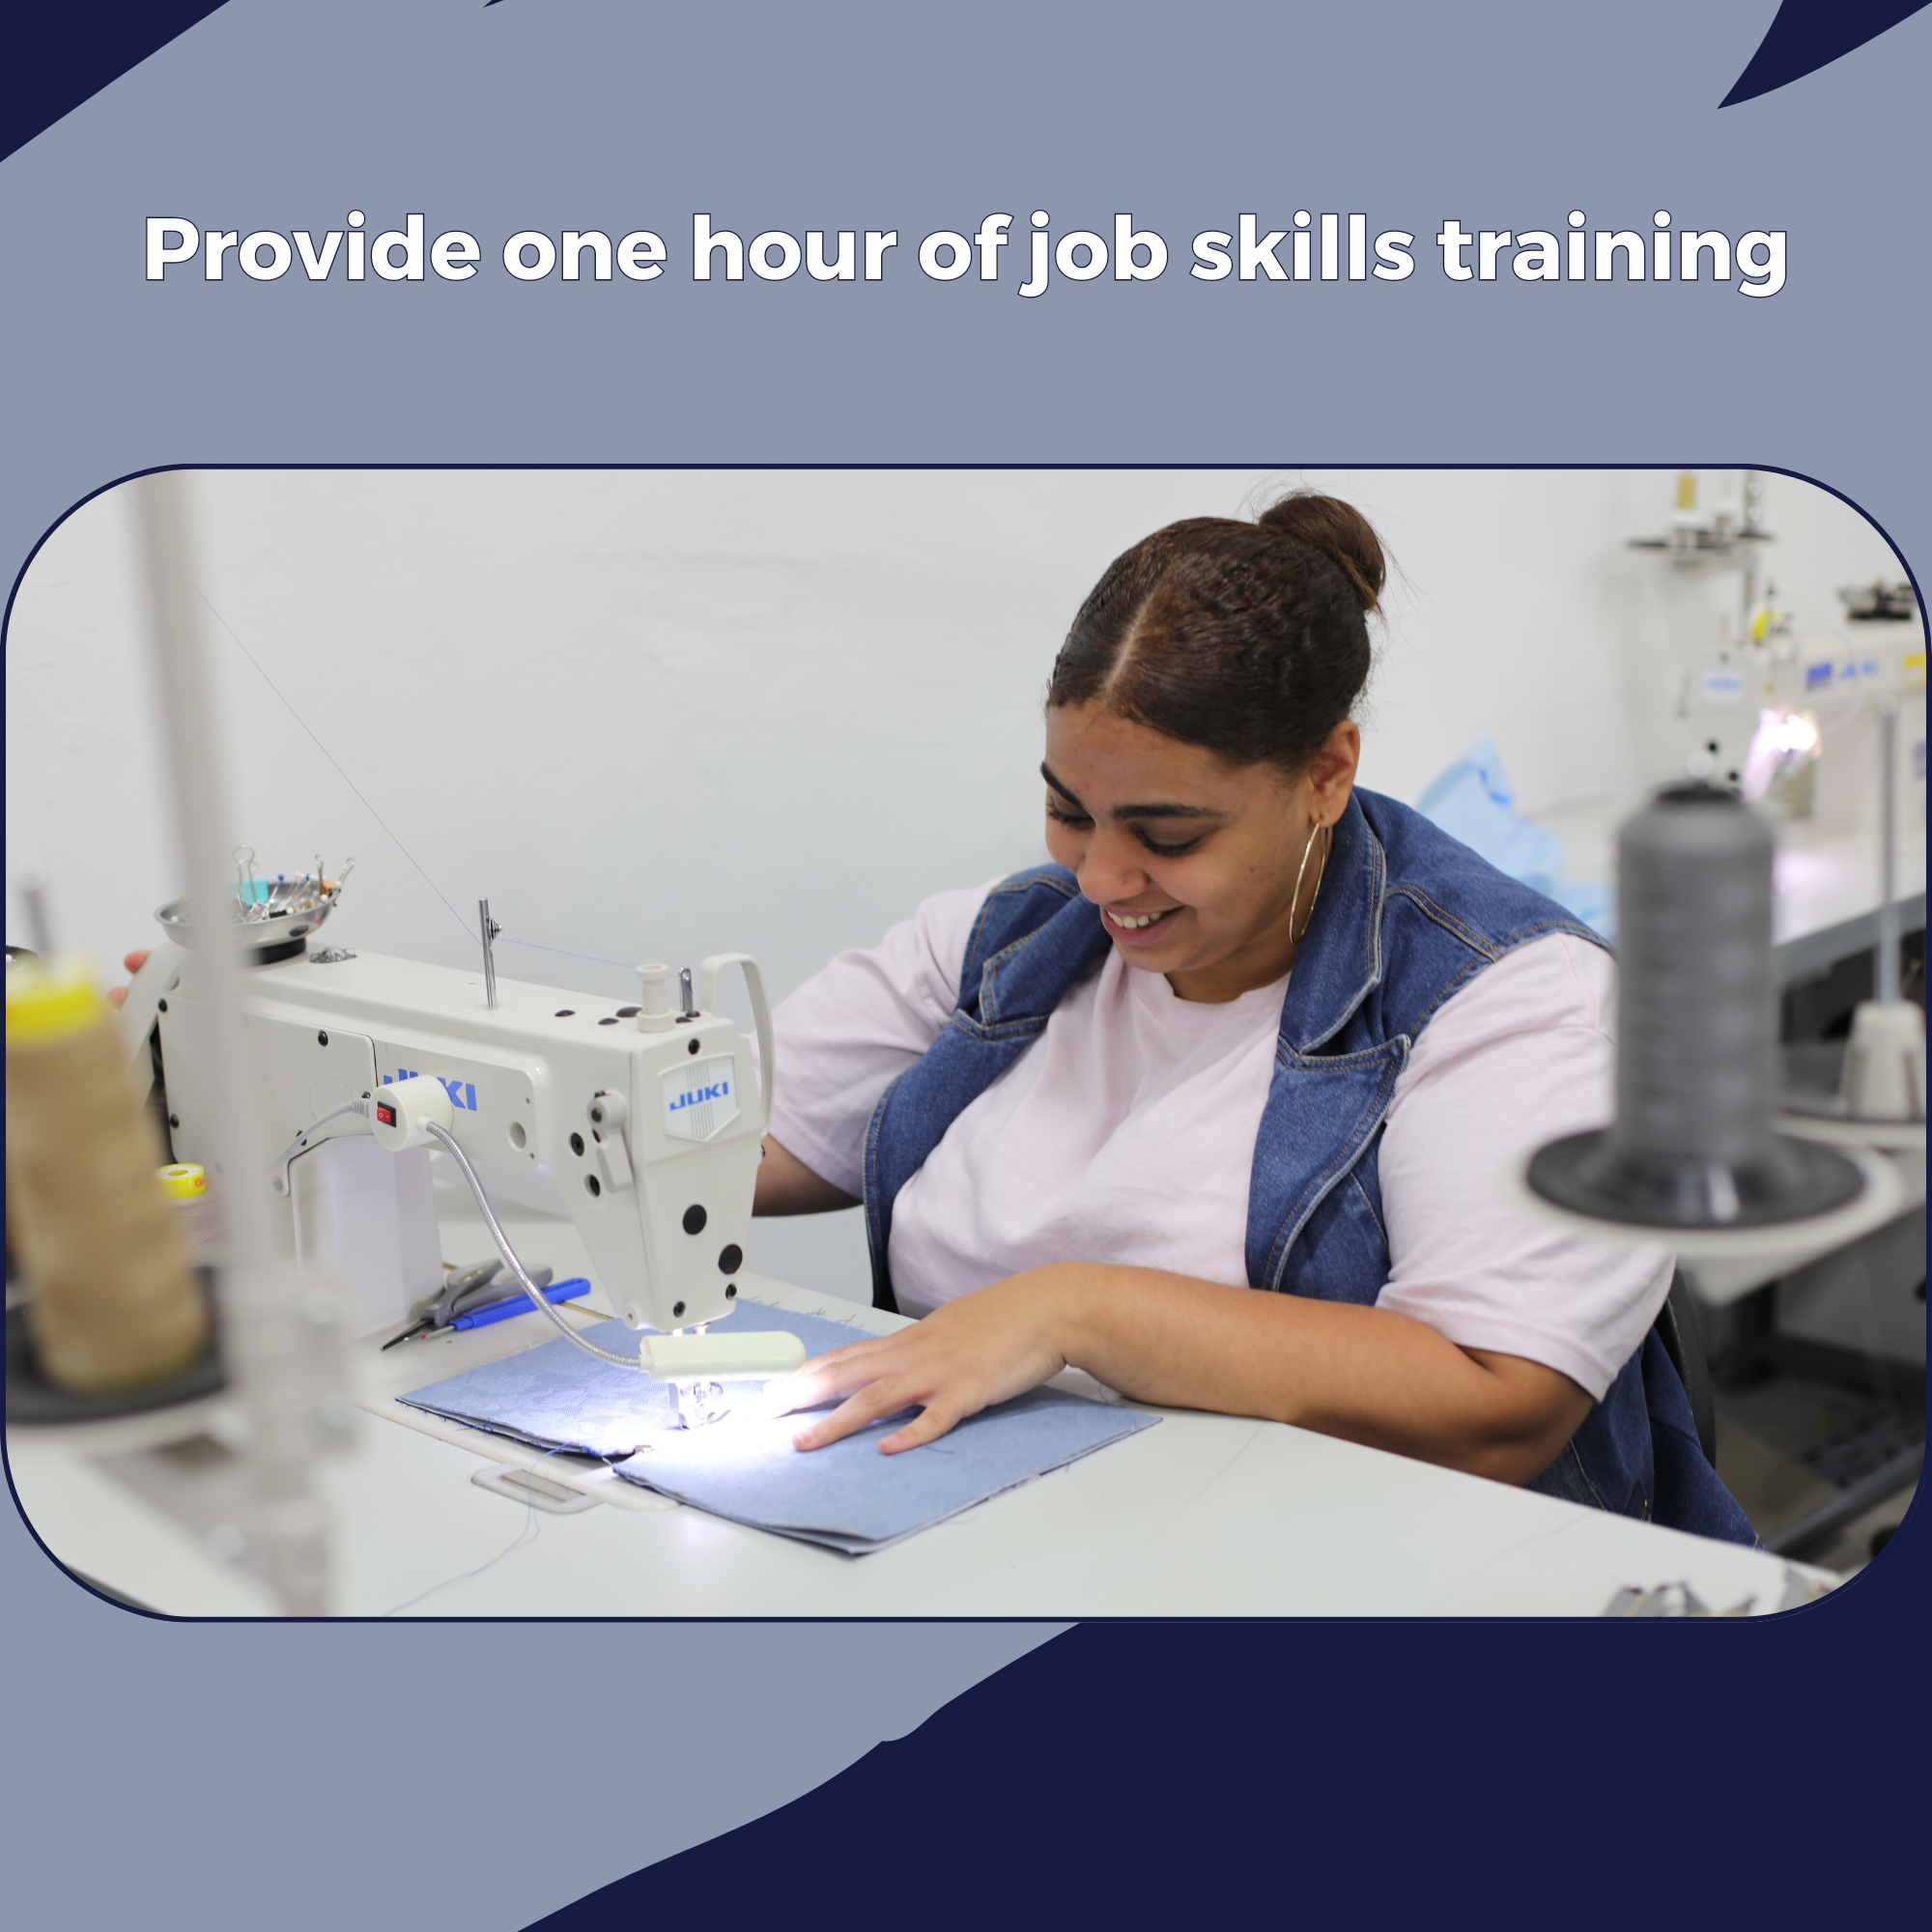 Provide one hour of job skills training